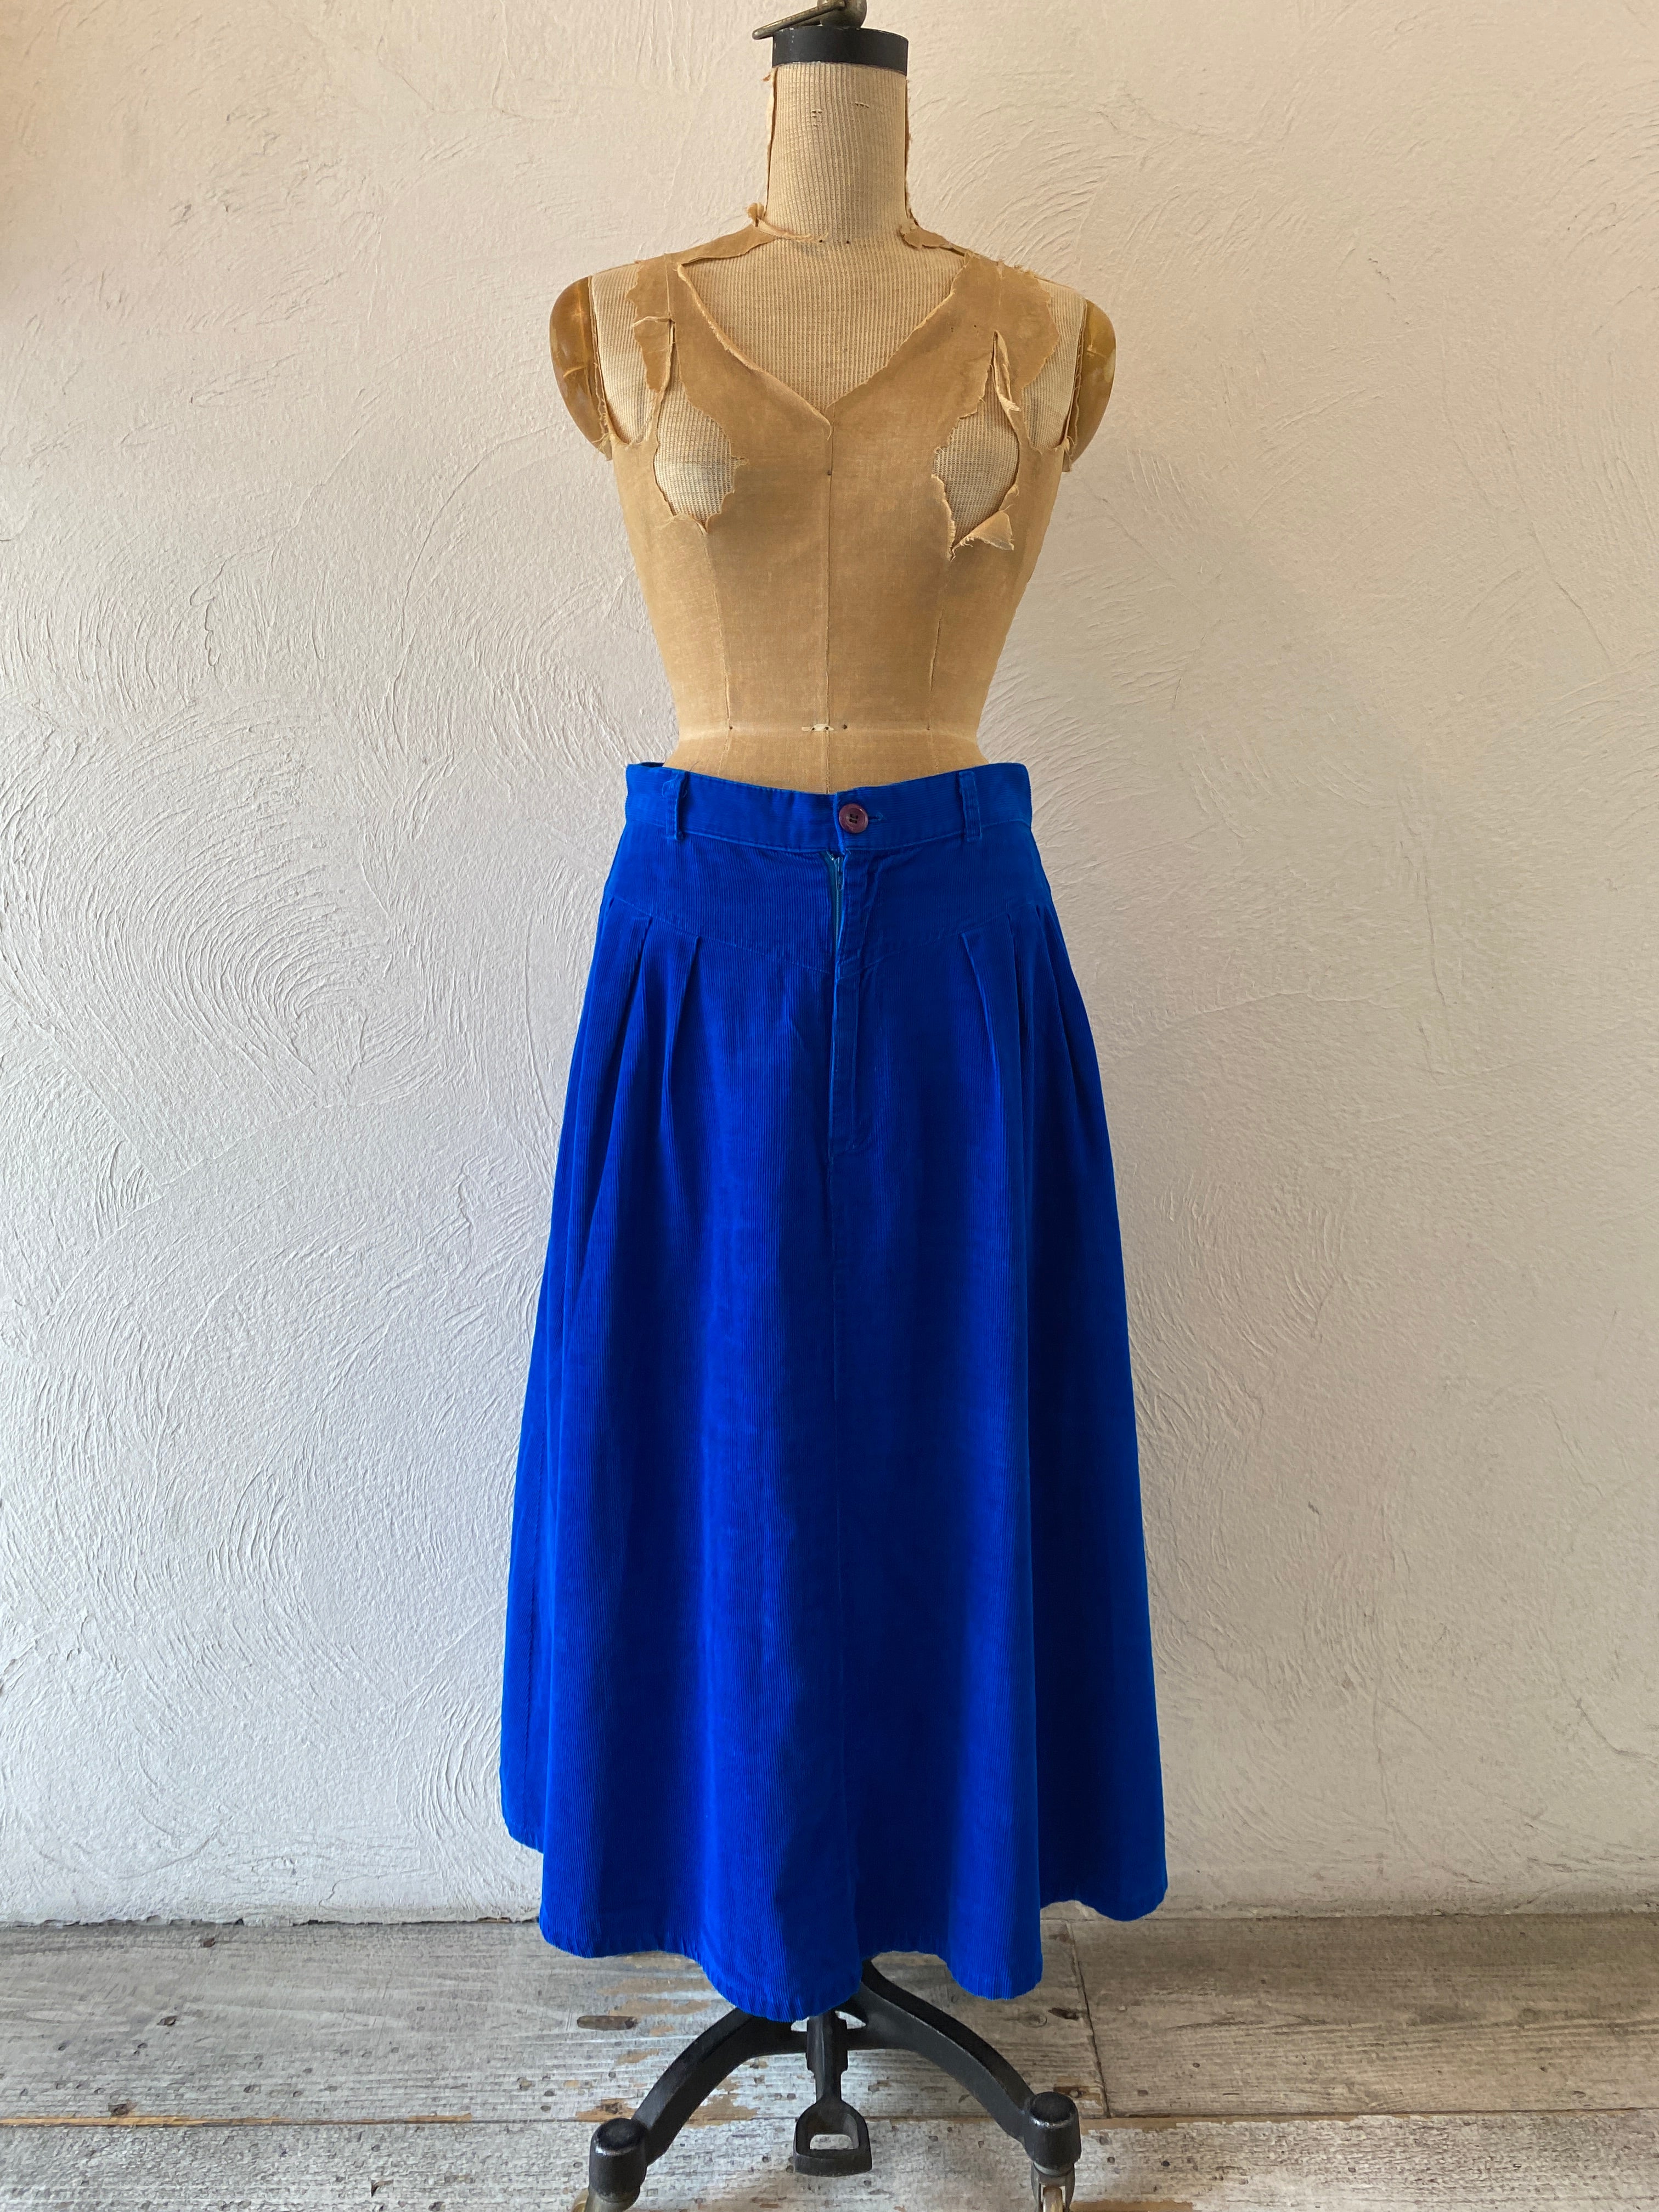 deep blue corduroy skirt